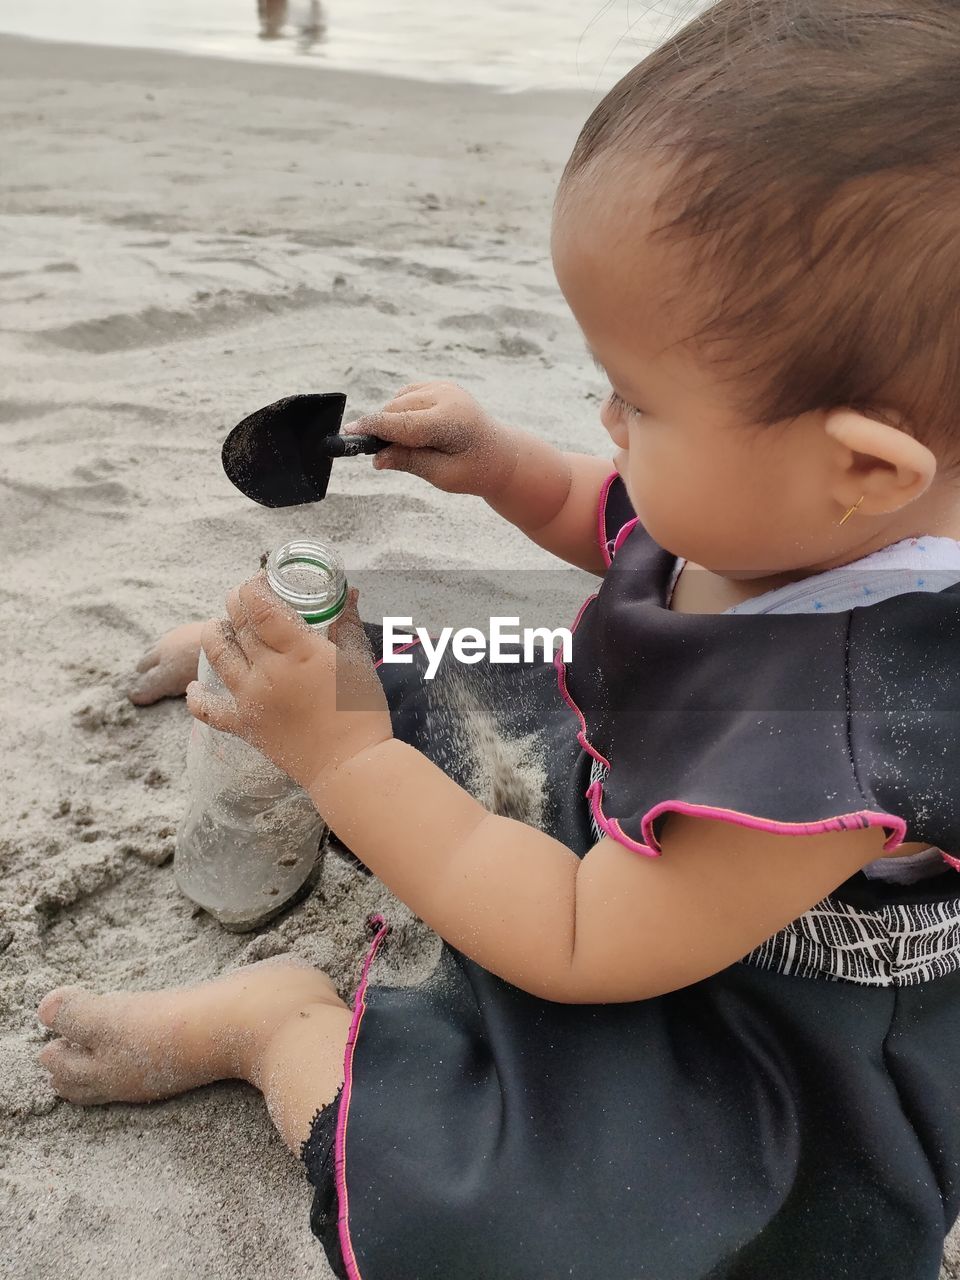 Baby girl playing sandbeach with plastic bottles